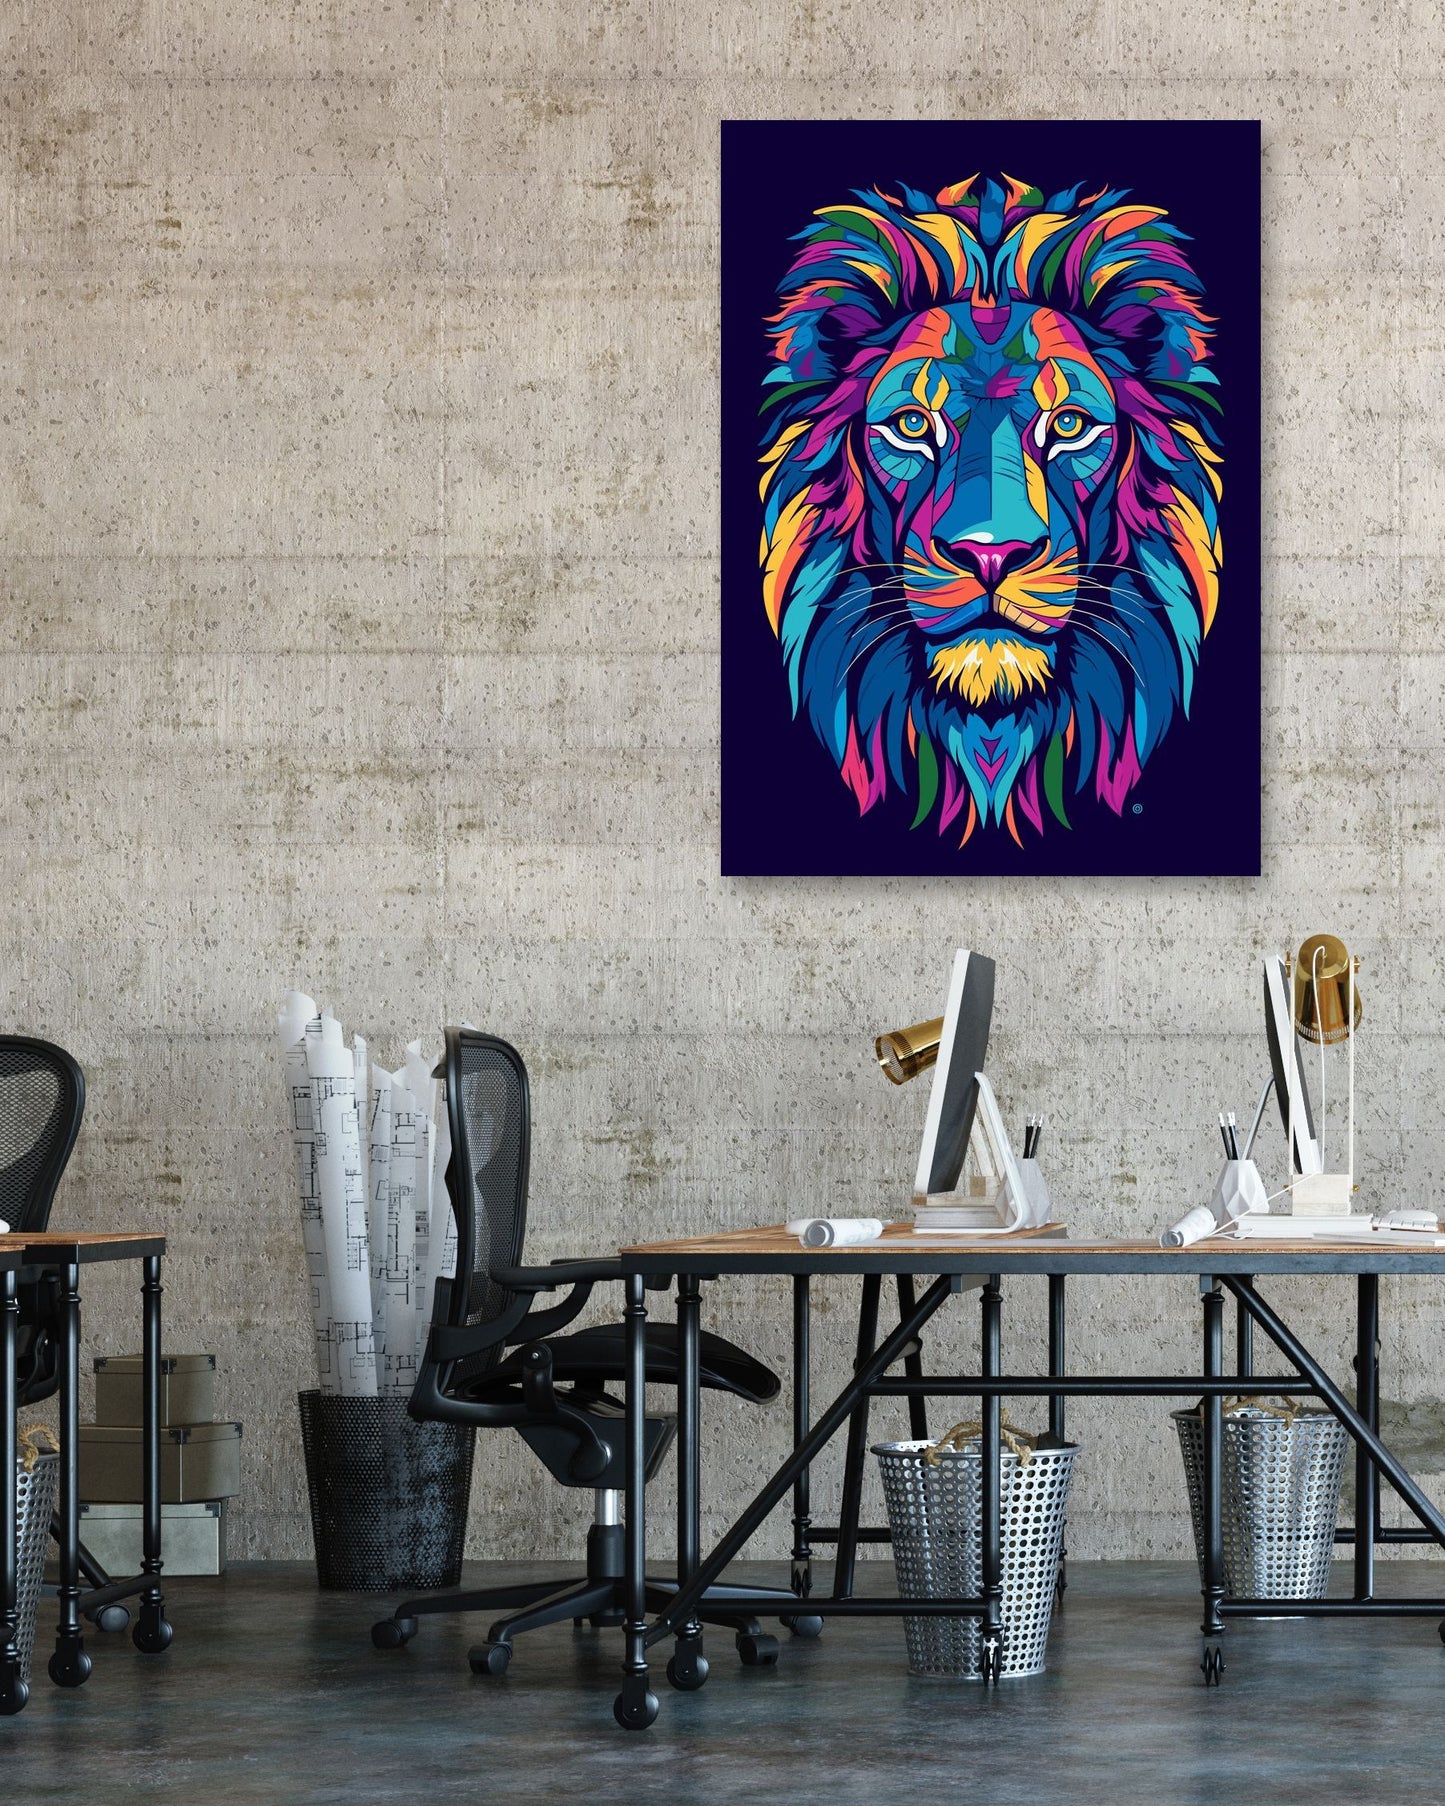 Lion King Popart 1 - @GreyArt